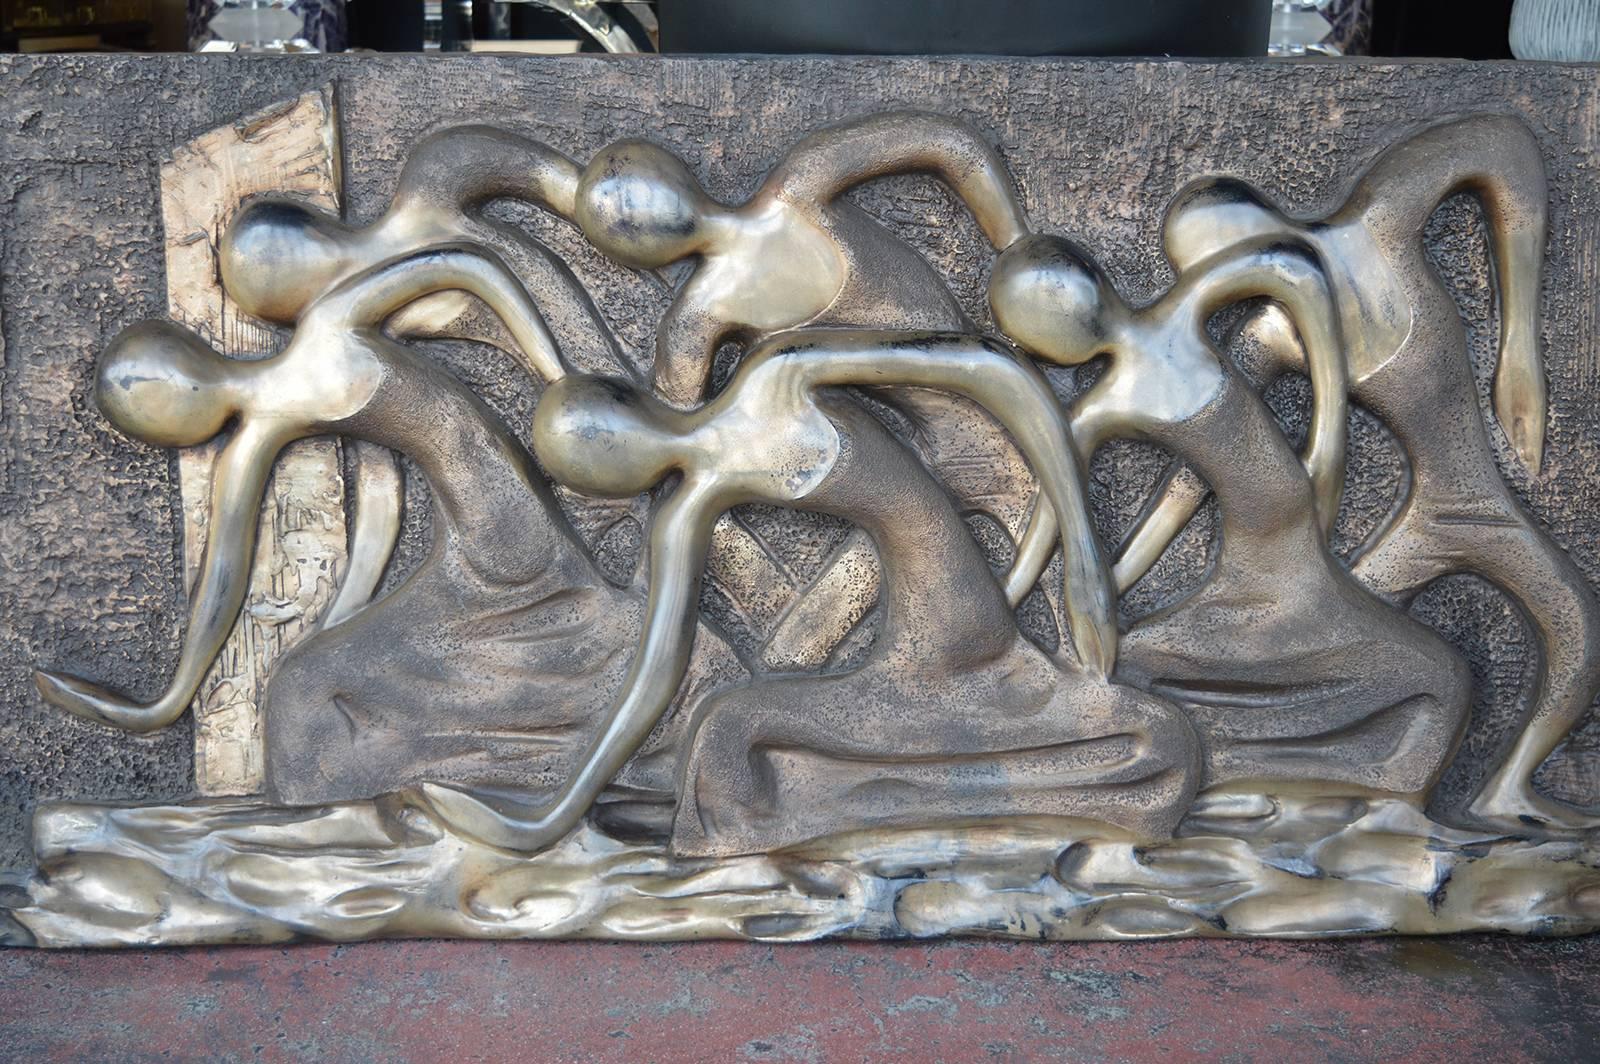 Fiberglass wall sculpture of dancers by Finesse Original.